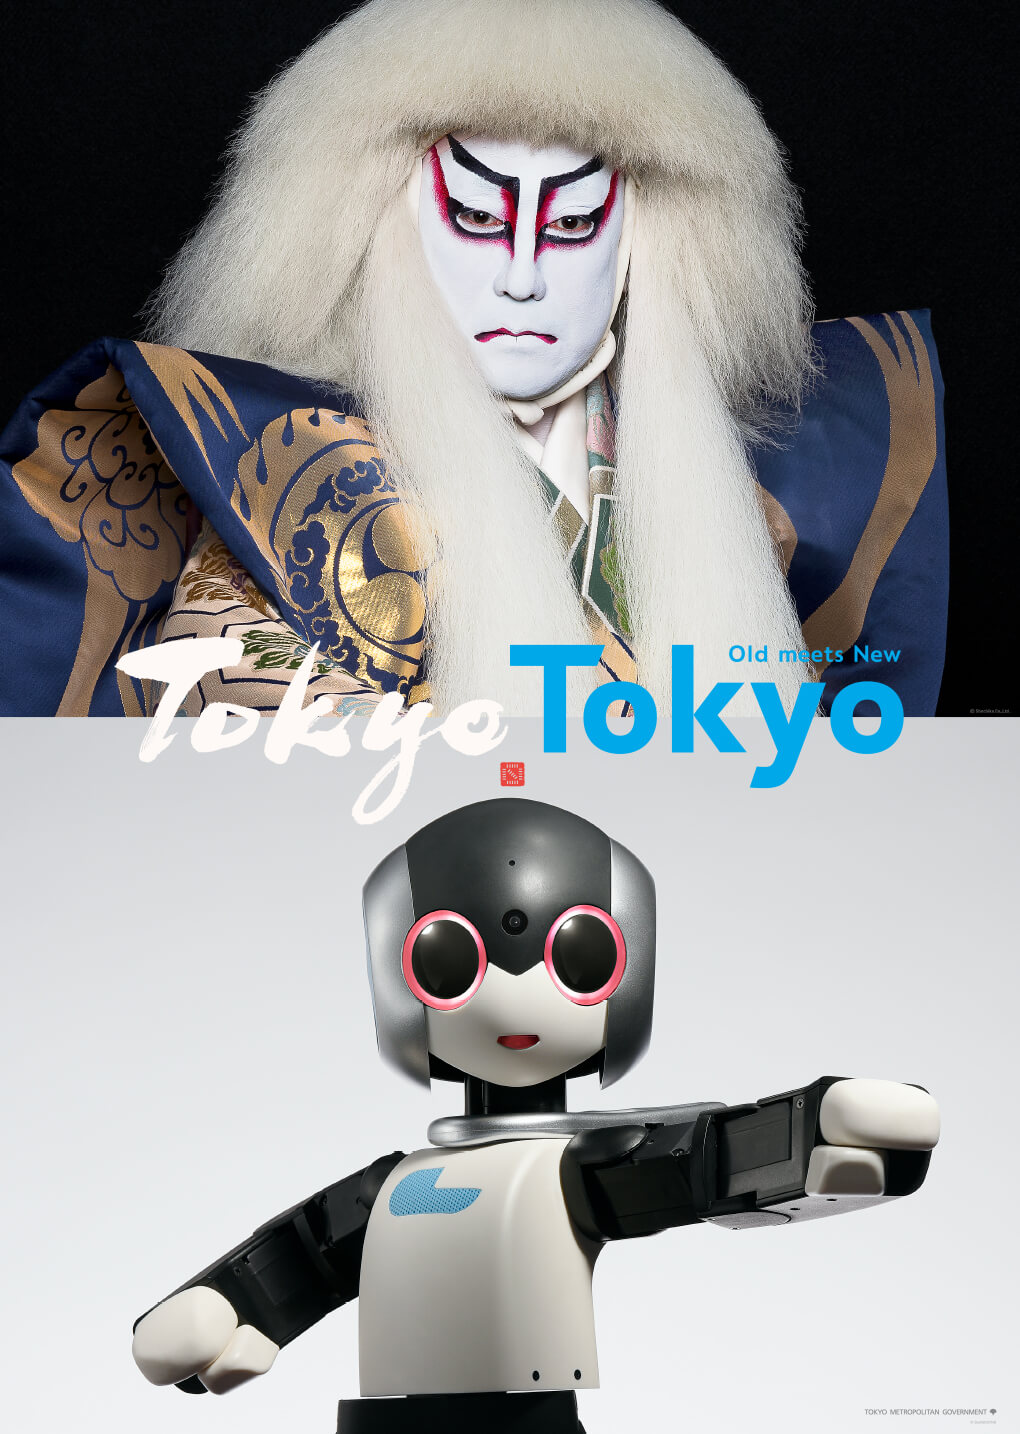 TokyoTokyo Old meets New Brand poster 1